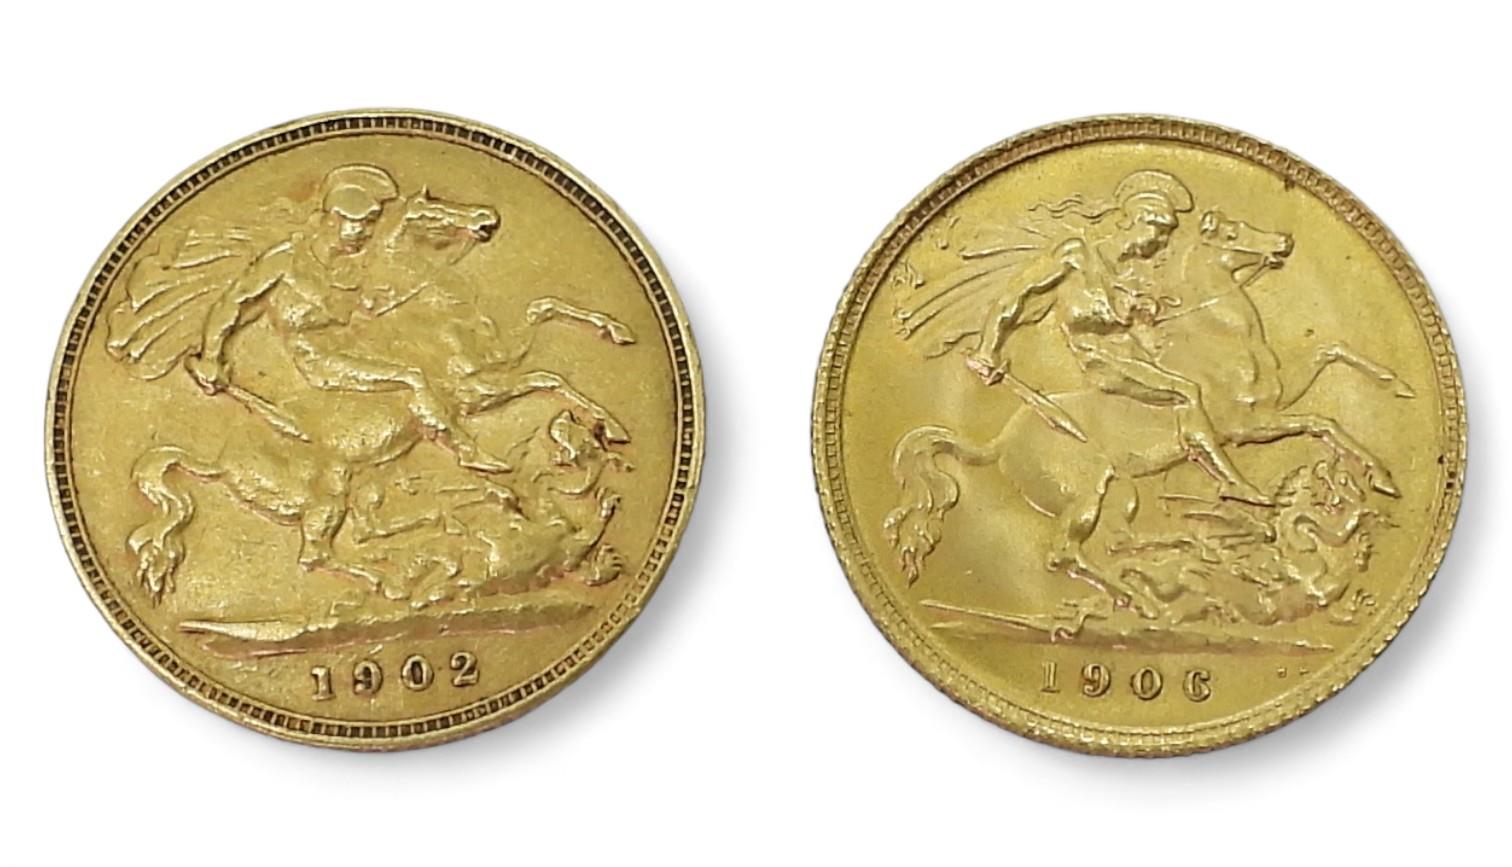 Edward VII (1901-1910) Half Sovereign Coins, 1902 4 grams, 1906 4 grams Obverse Portrait of King